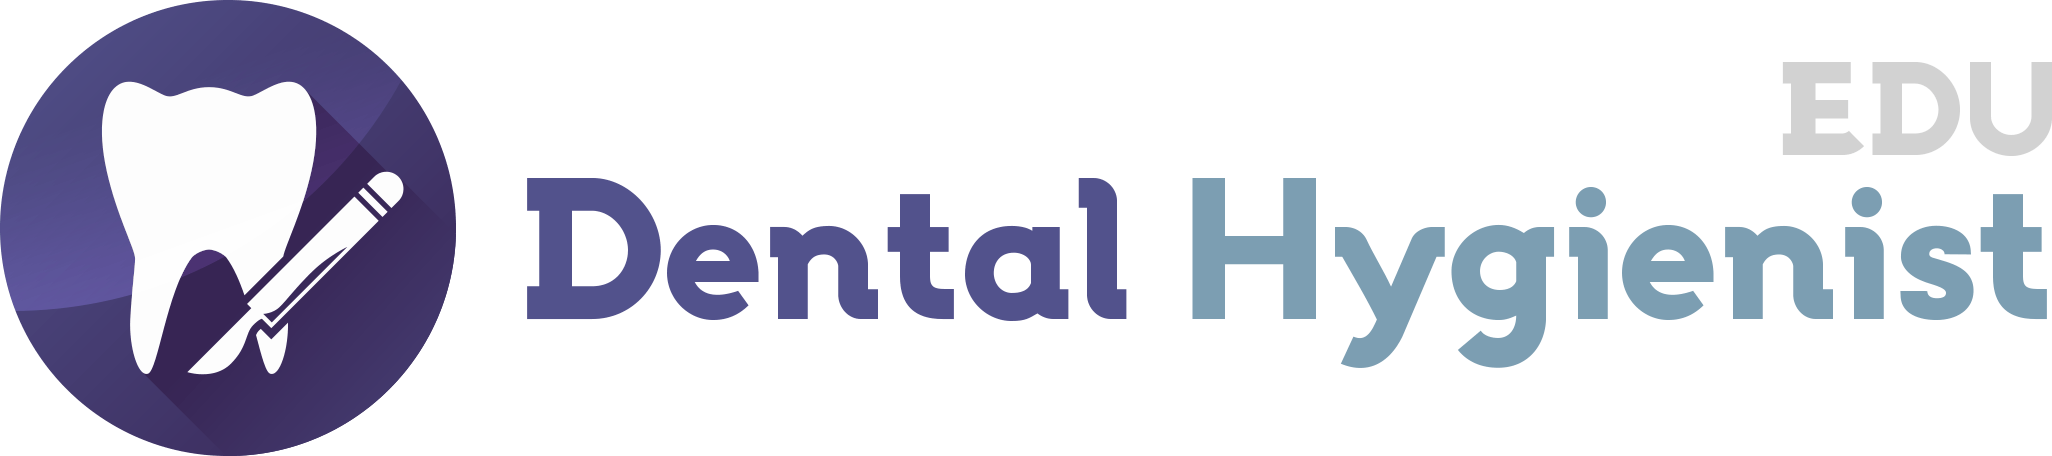 Dental Hygienist Logo - How To Become A Dental Hygienist? - Dental Hygienist Education